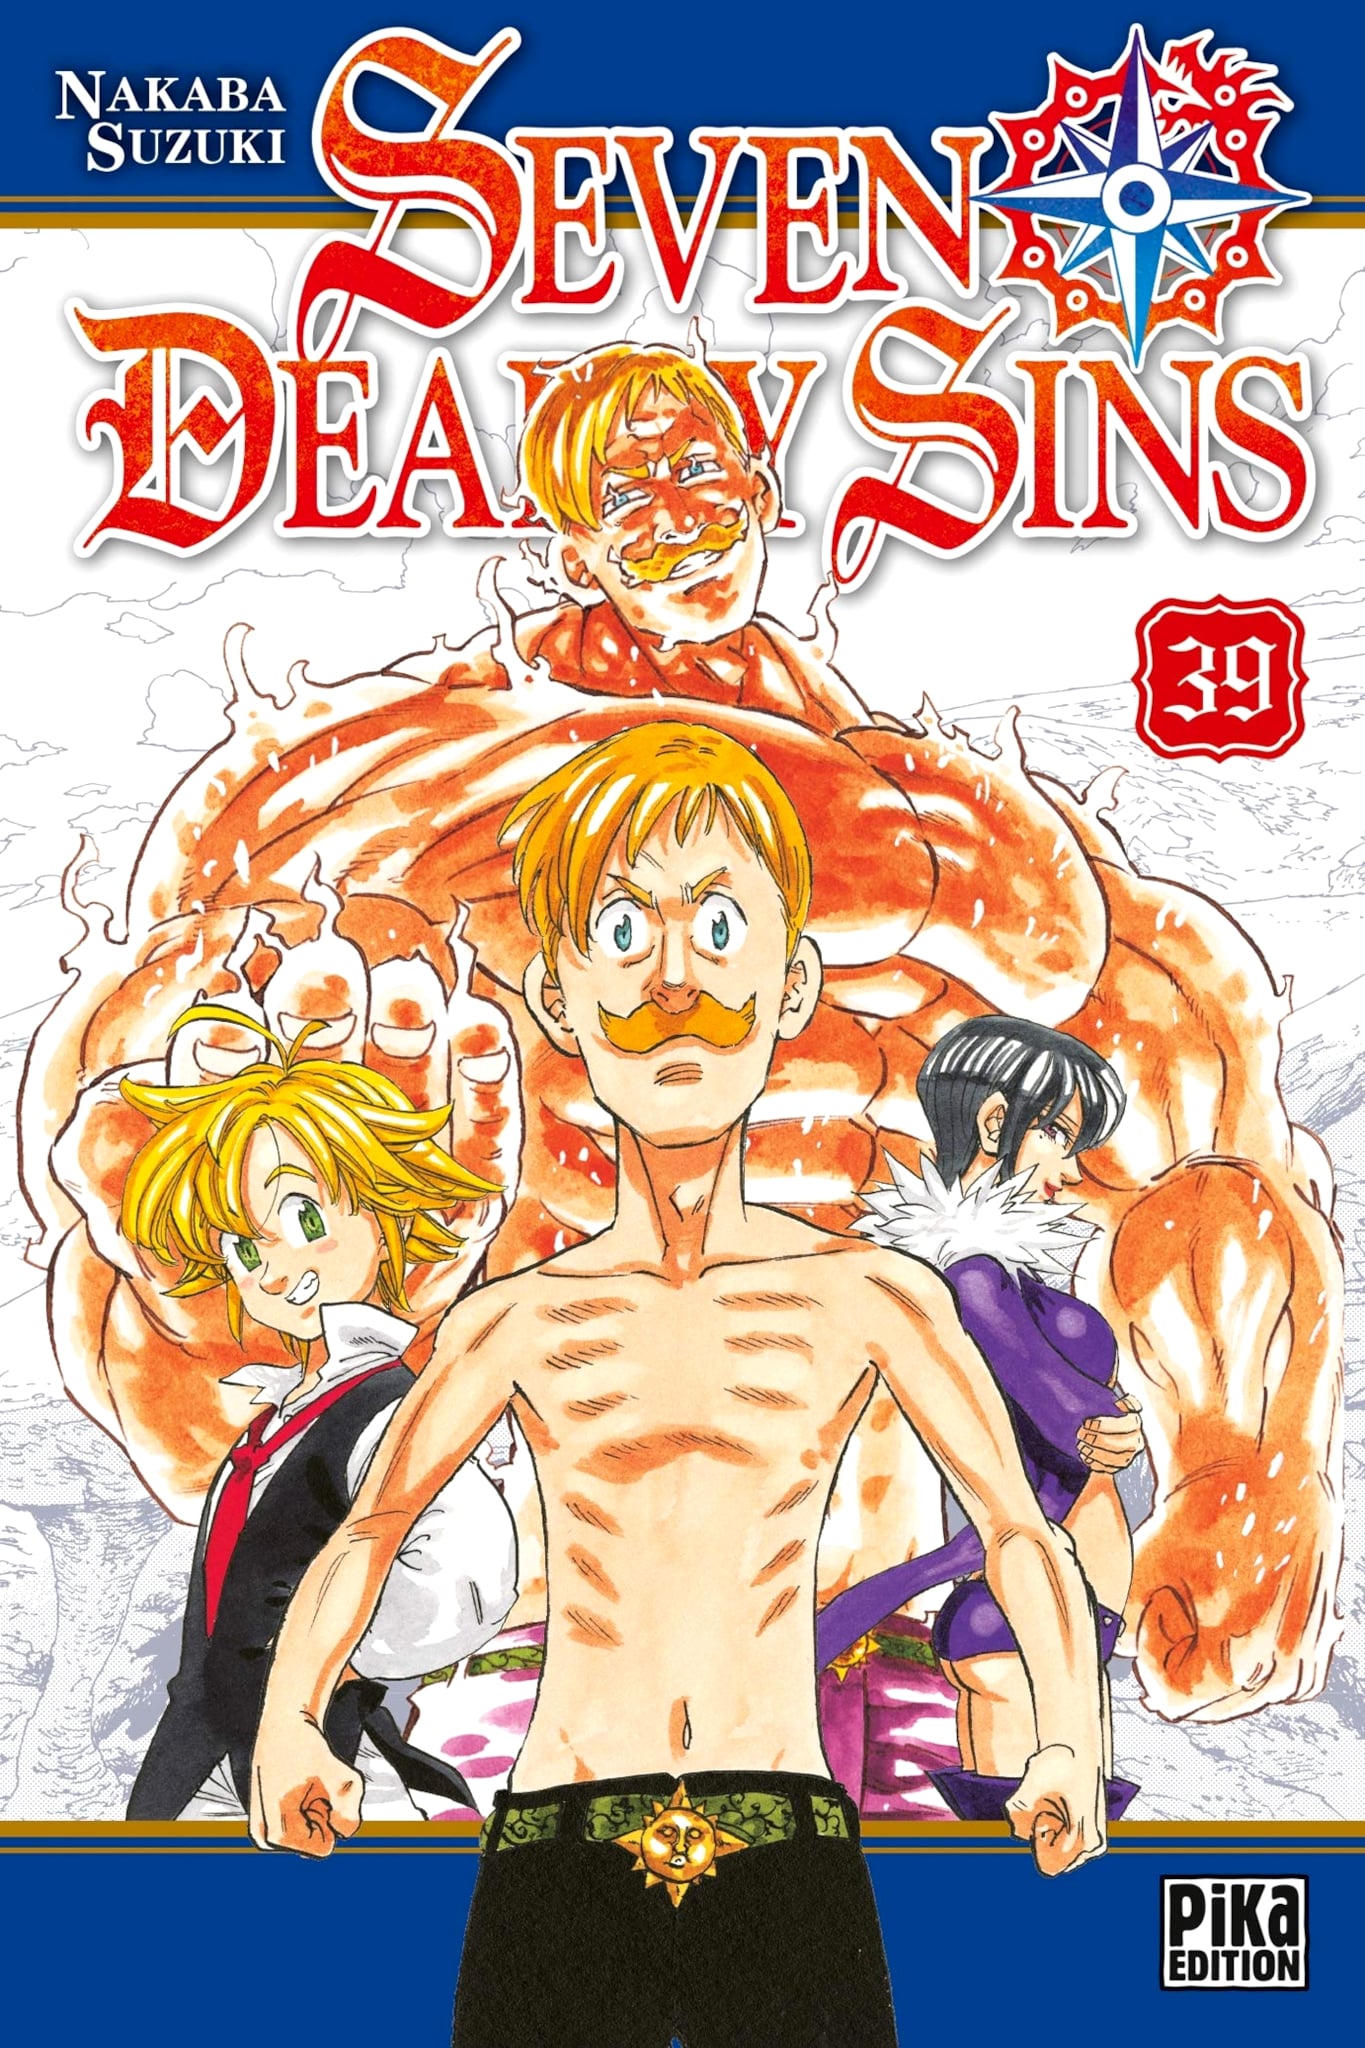 Tome 39 du manga The Seven Deadly Sins